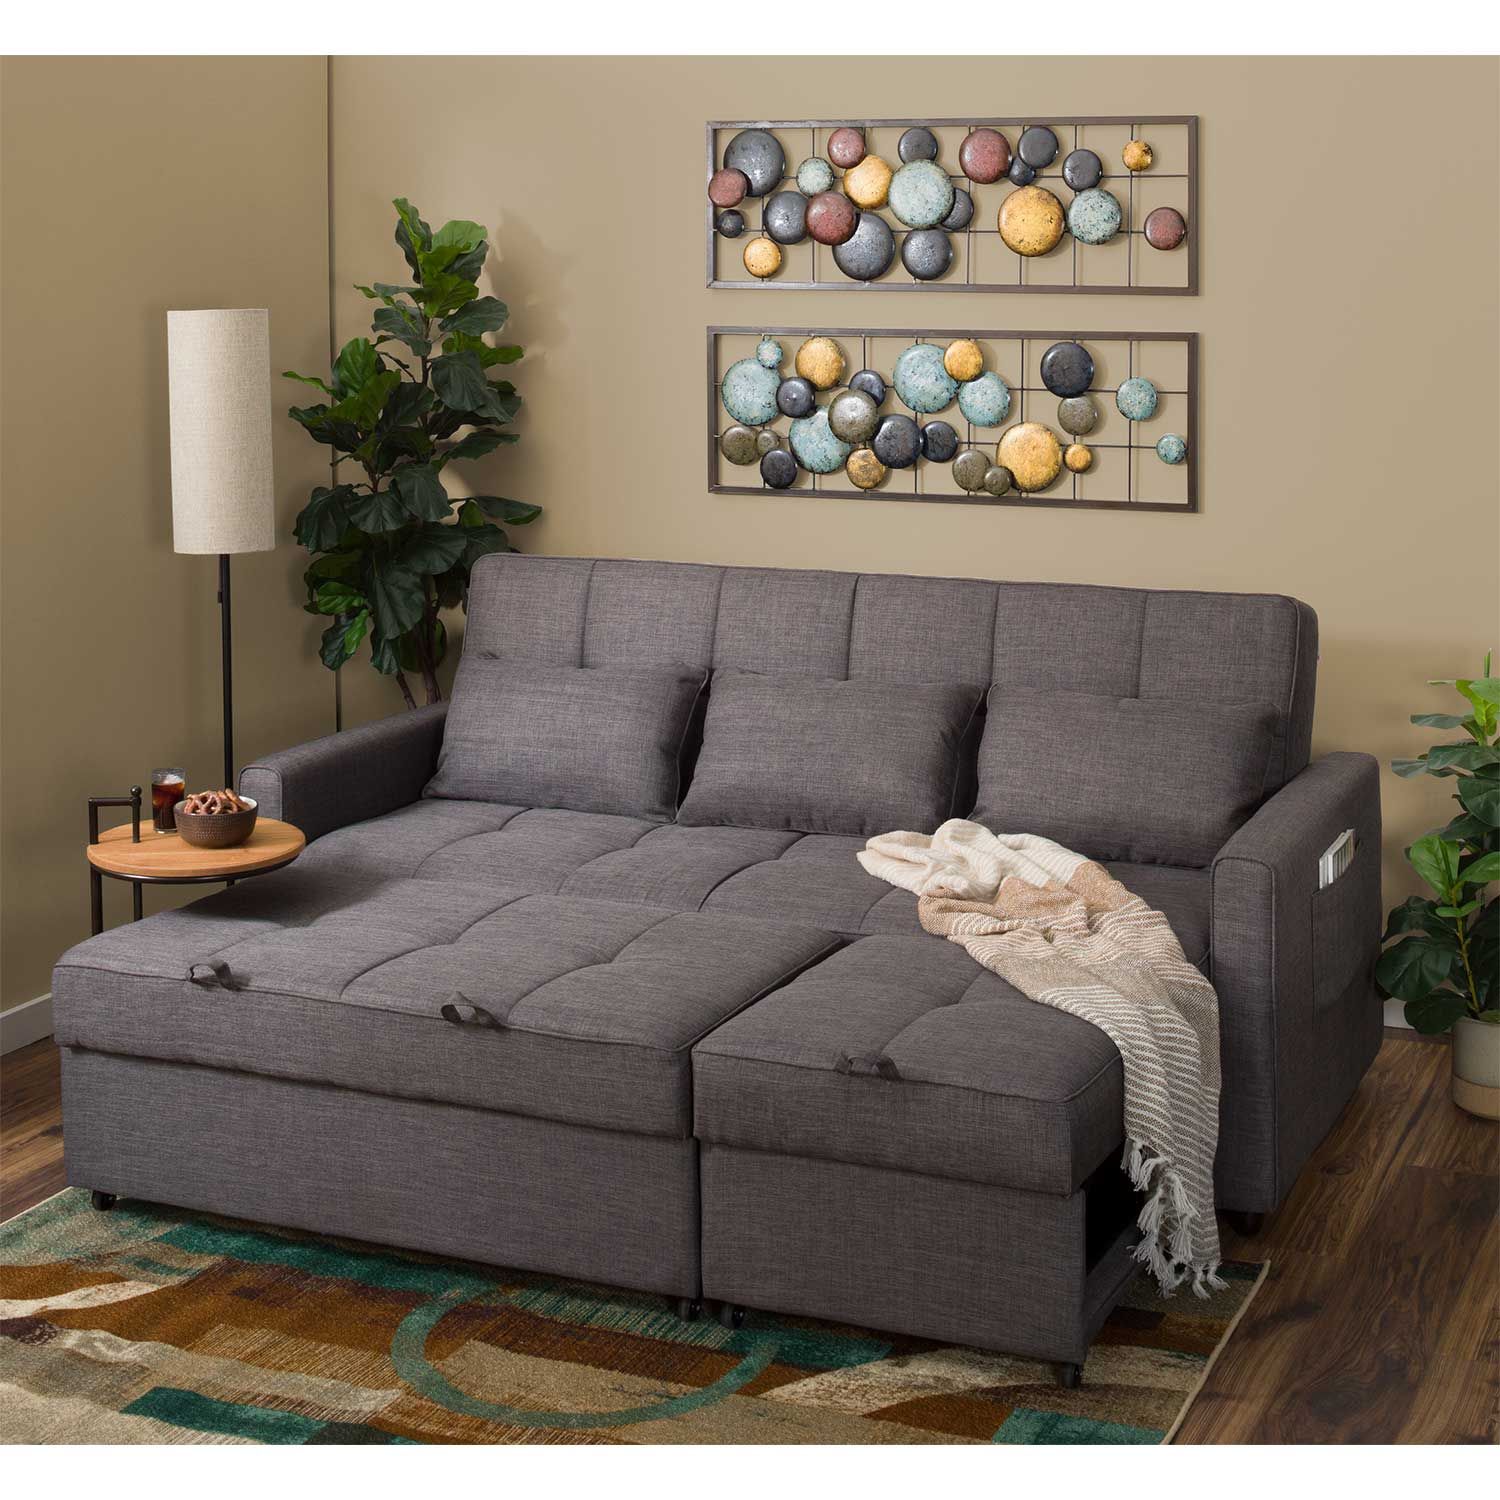 Skylar Pull Out Sleeper Sofa | 1a Skylar | Afw Within 3 In 1 Gray Pull Out Sleeper Sofas (View 16 of 20)